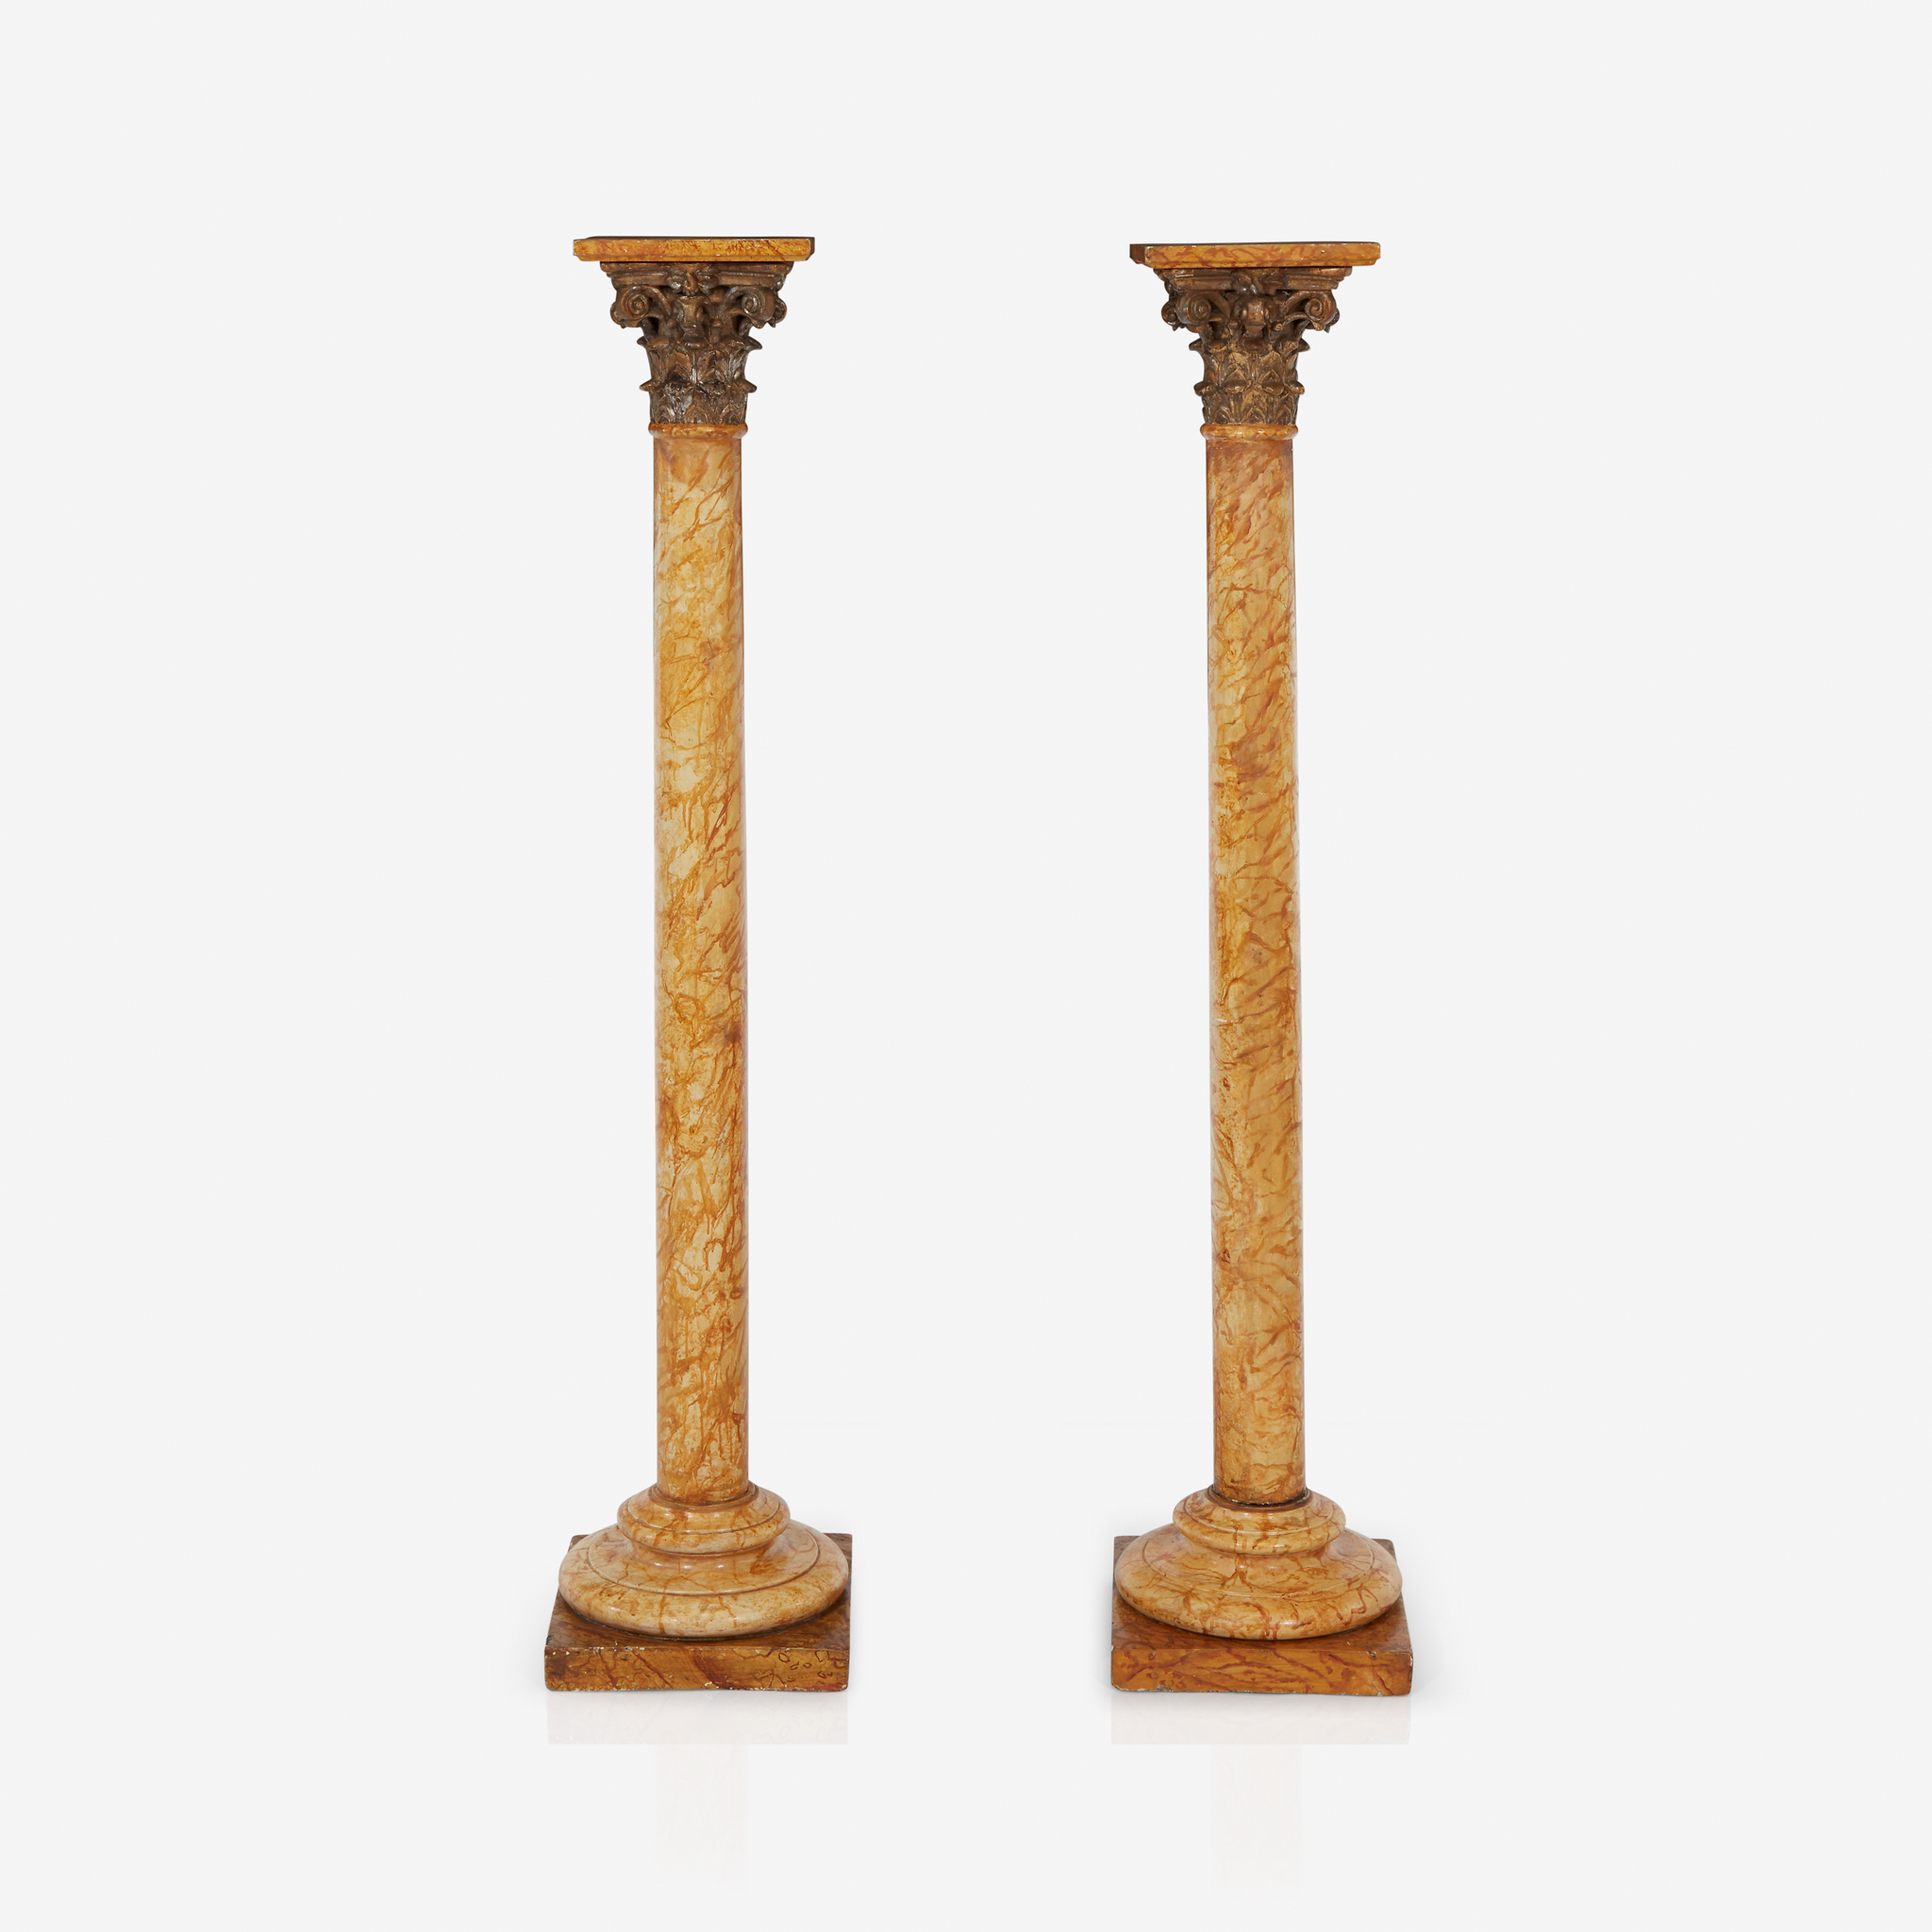 A pair of Victorian giltwood and faux marble Corinthian columns, Third quarter 19th century